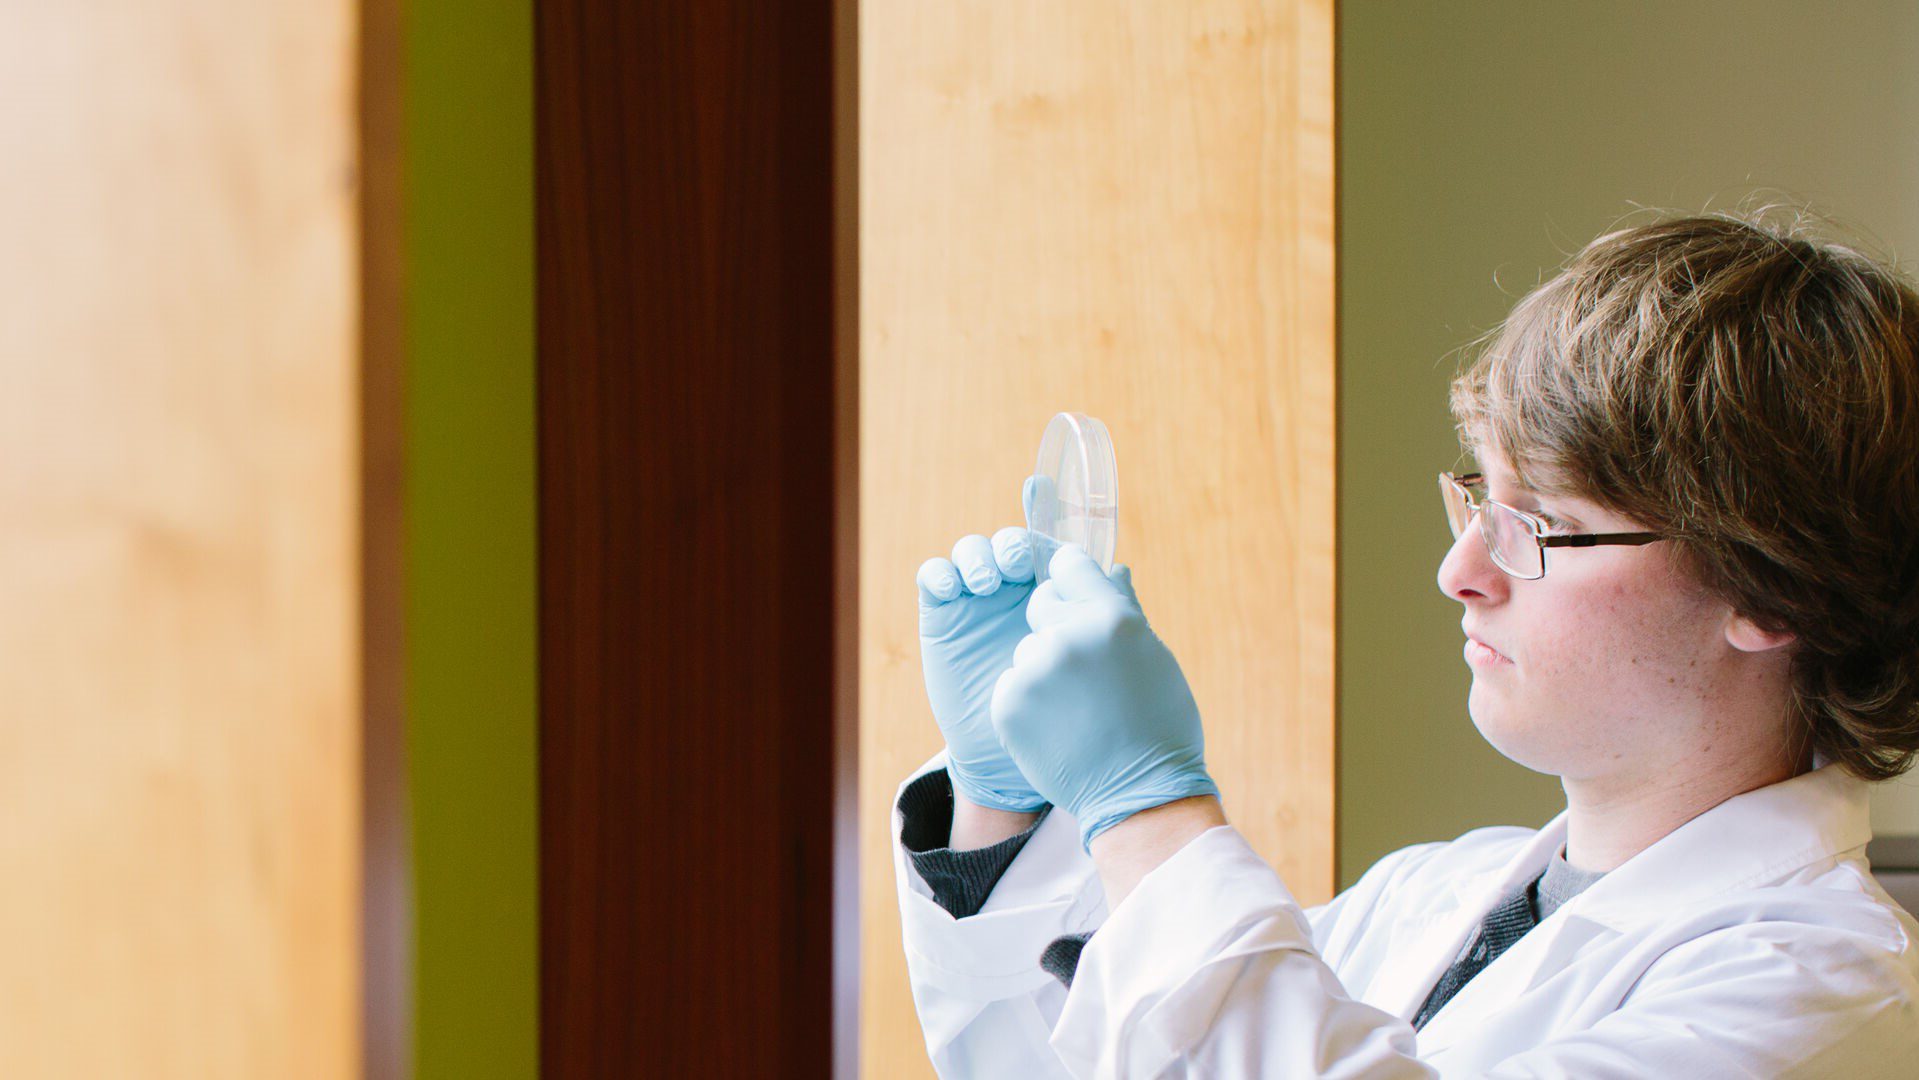 Student standing by window examining petri dish.